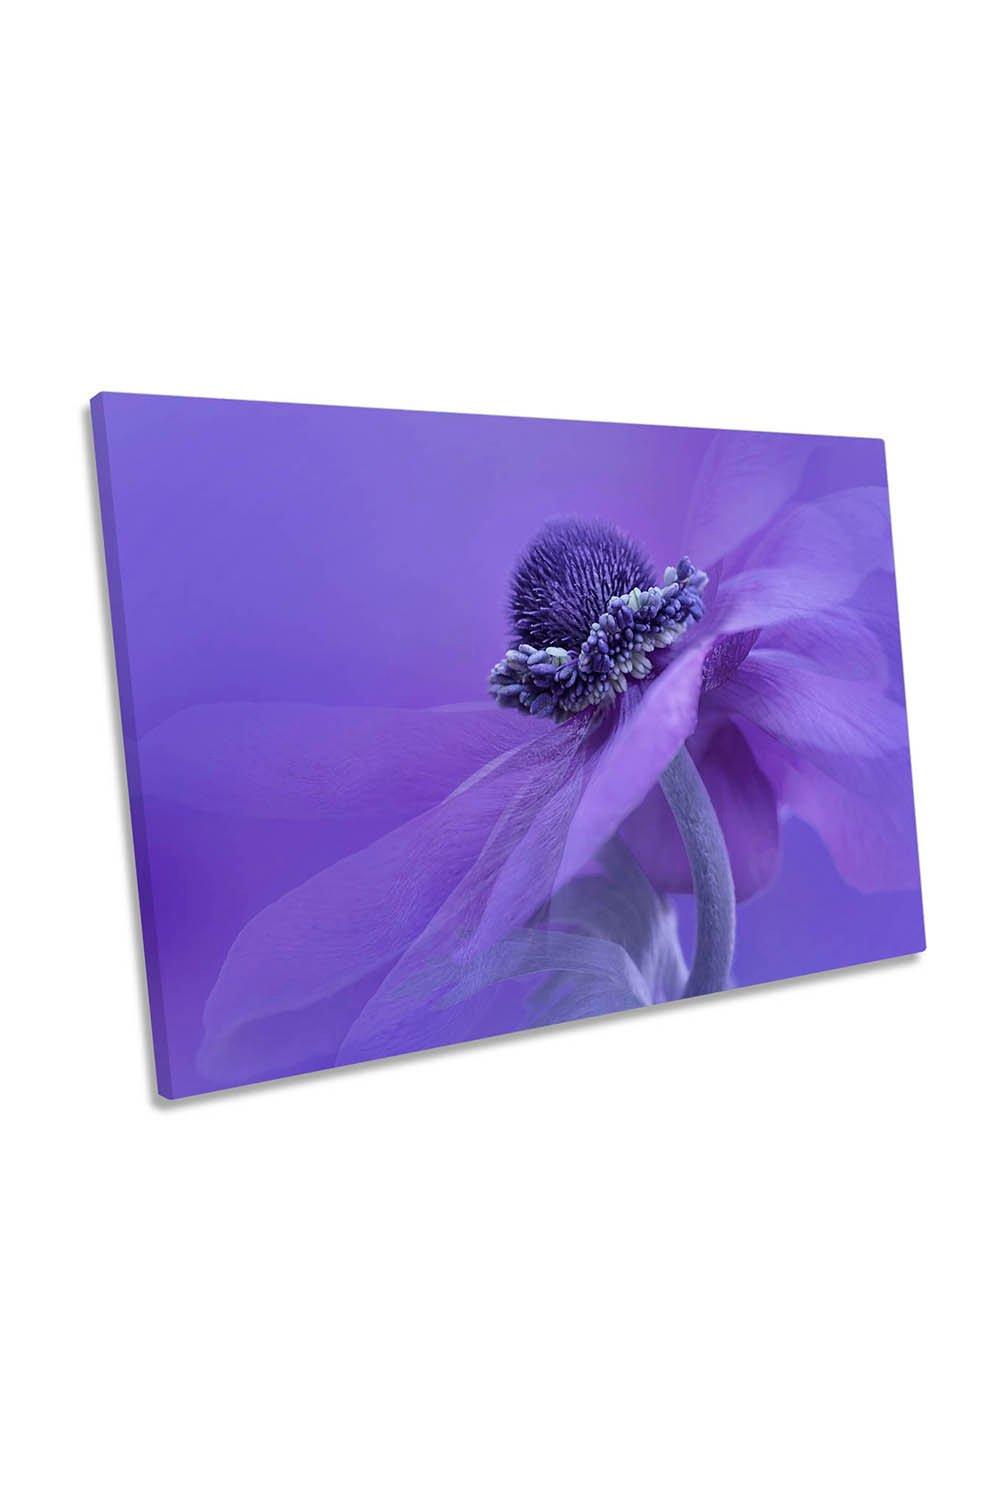 Purple Anemone Flower Petals Floral Canvas Wall Art Picture Print